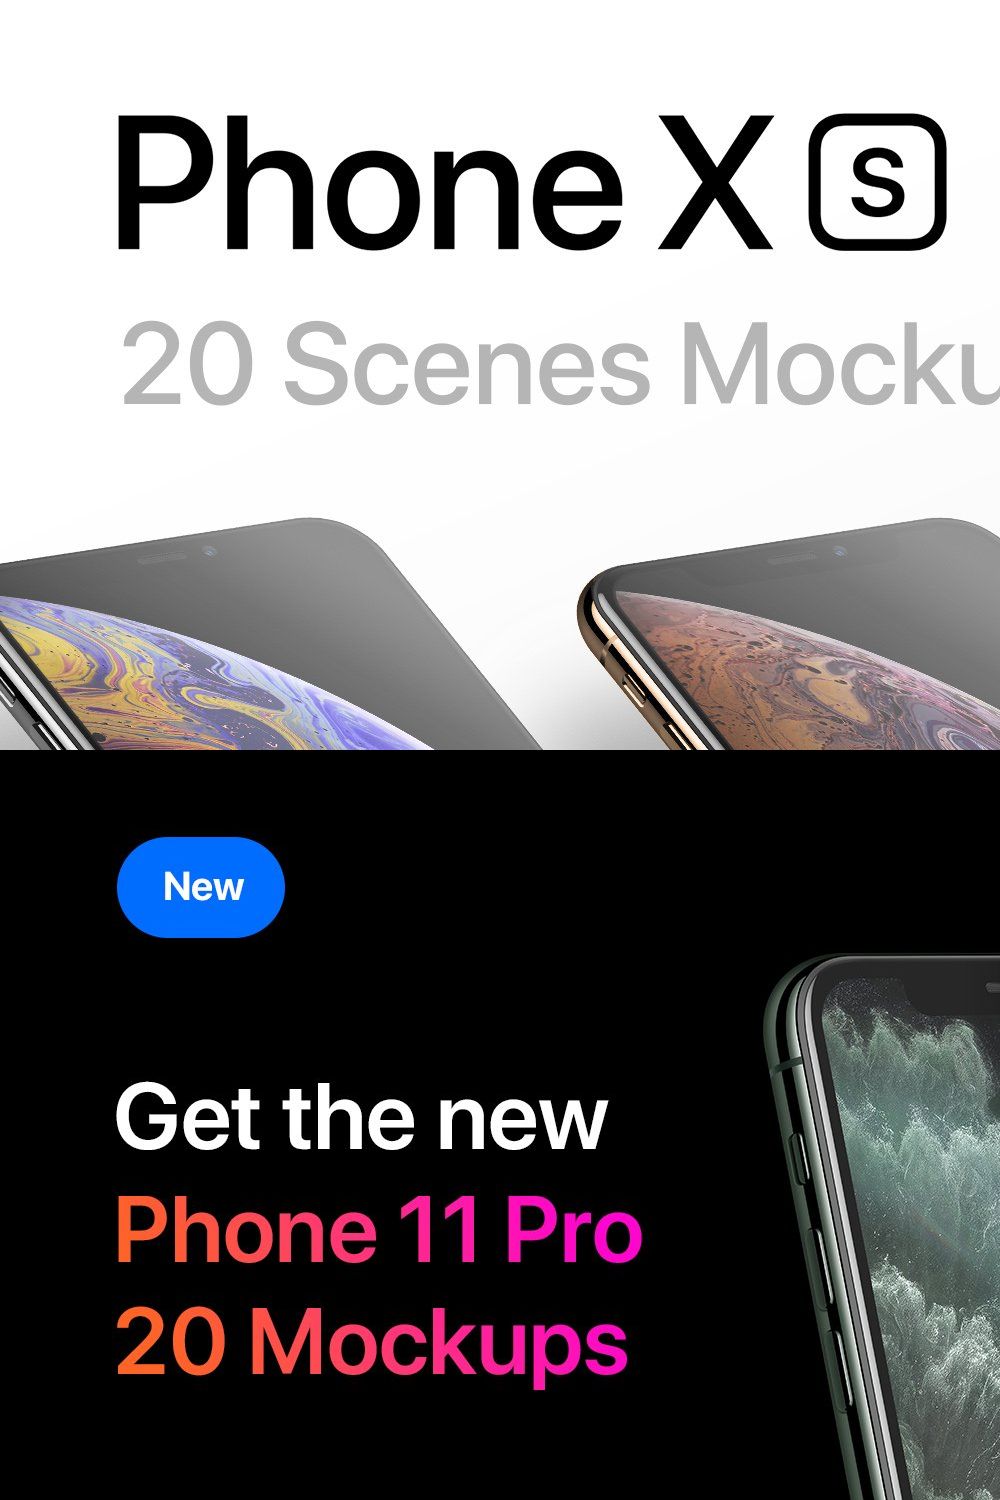 Phone XS 20 Mockups Scenes 5K - PSD pinterest preview image.